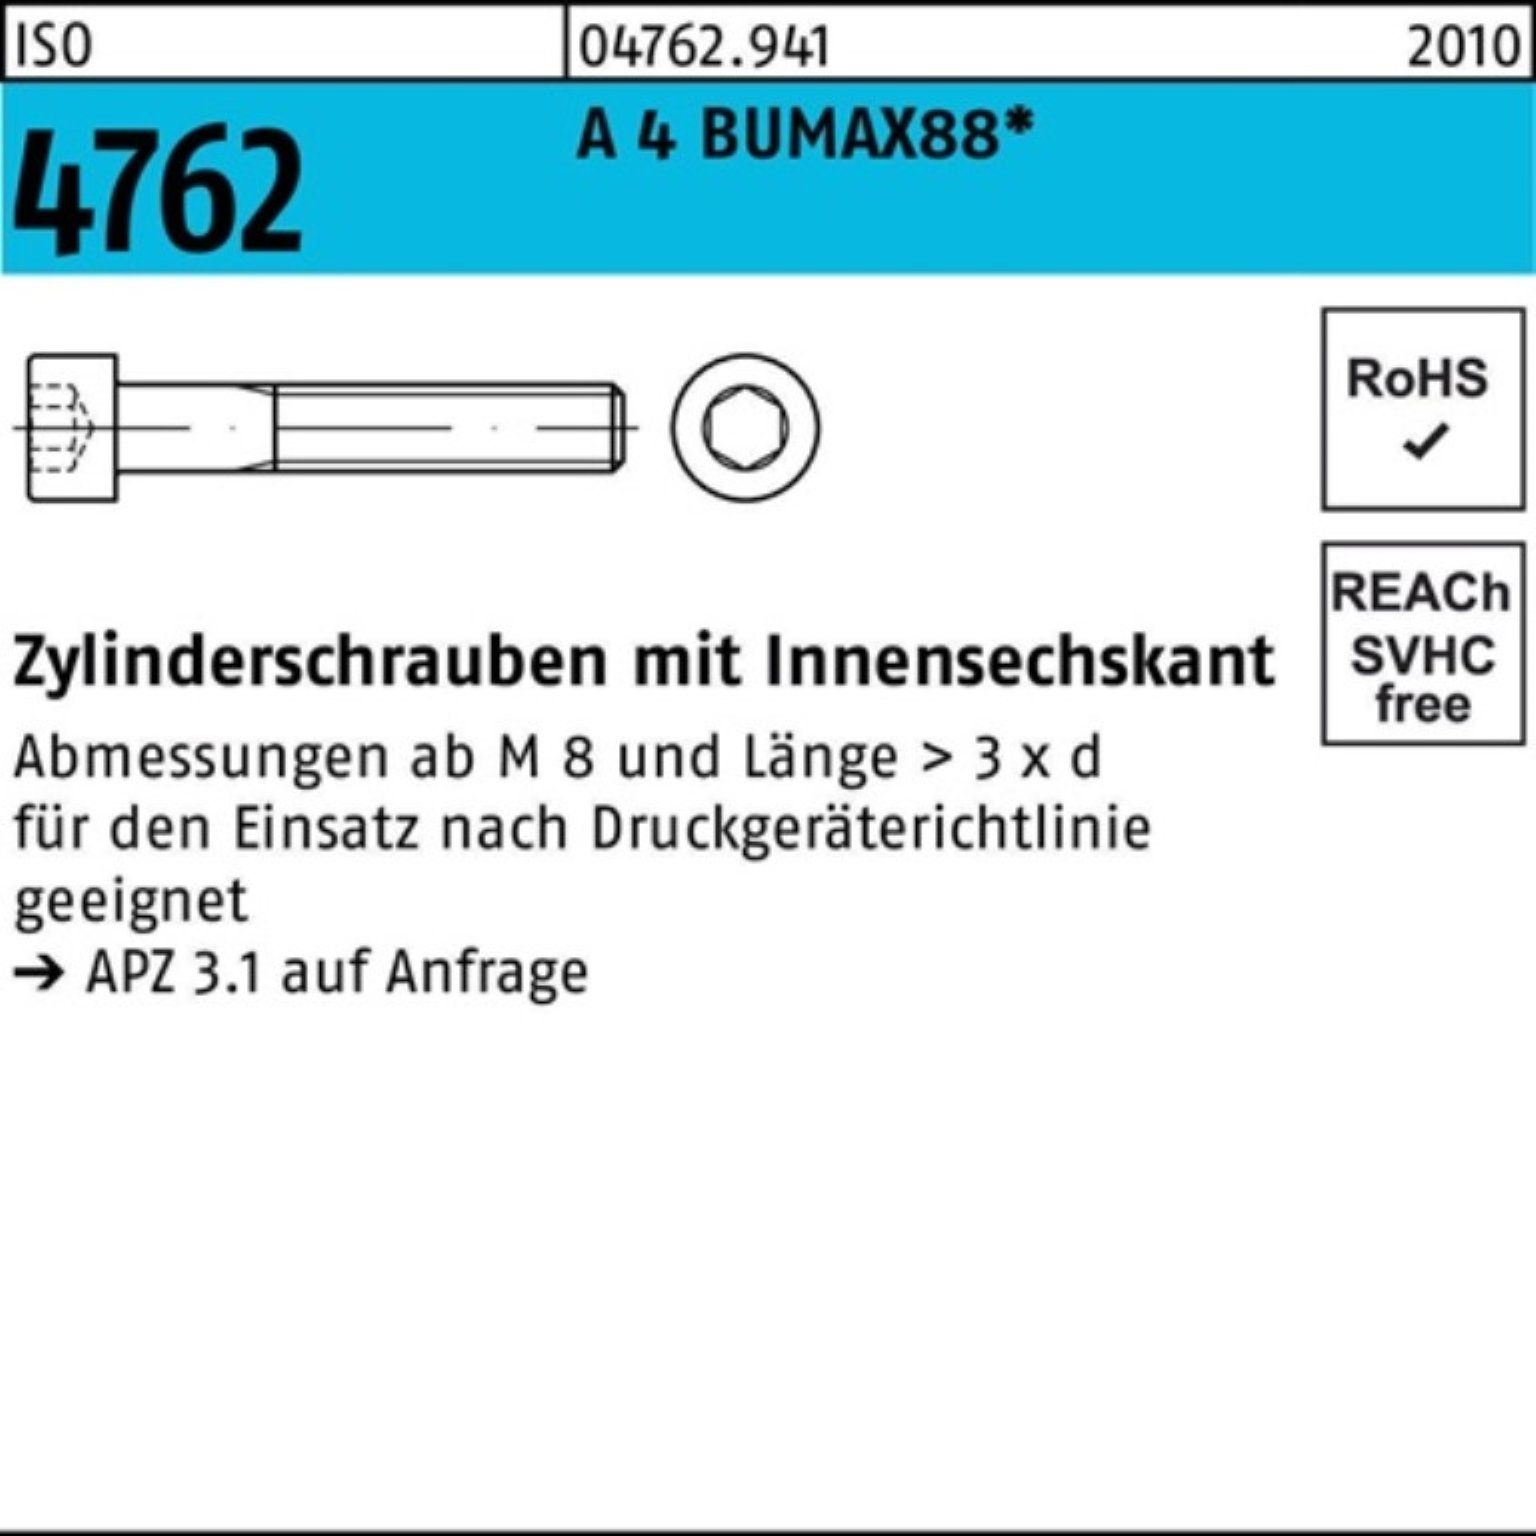 4762 Zylinderschraube Pack BUMAX88 50 4 35 M8x 100er ISO A Zylinderschraube Innen-6kt S Bufab